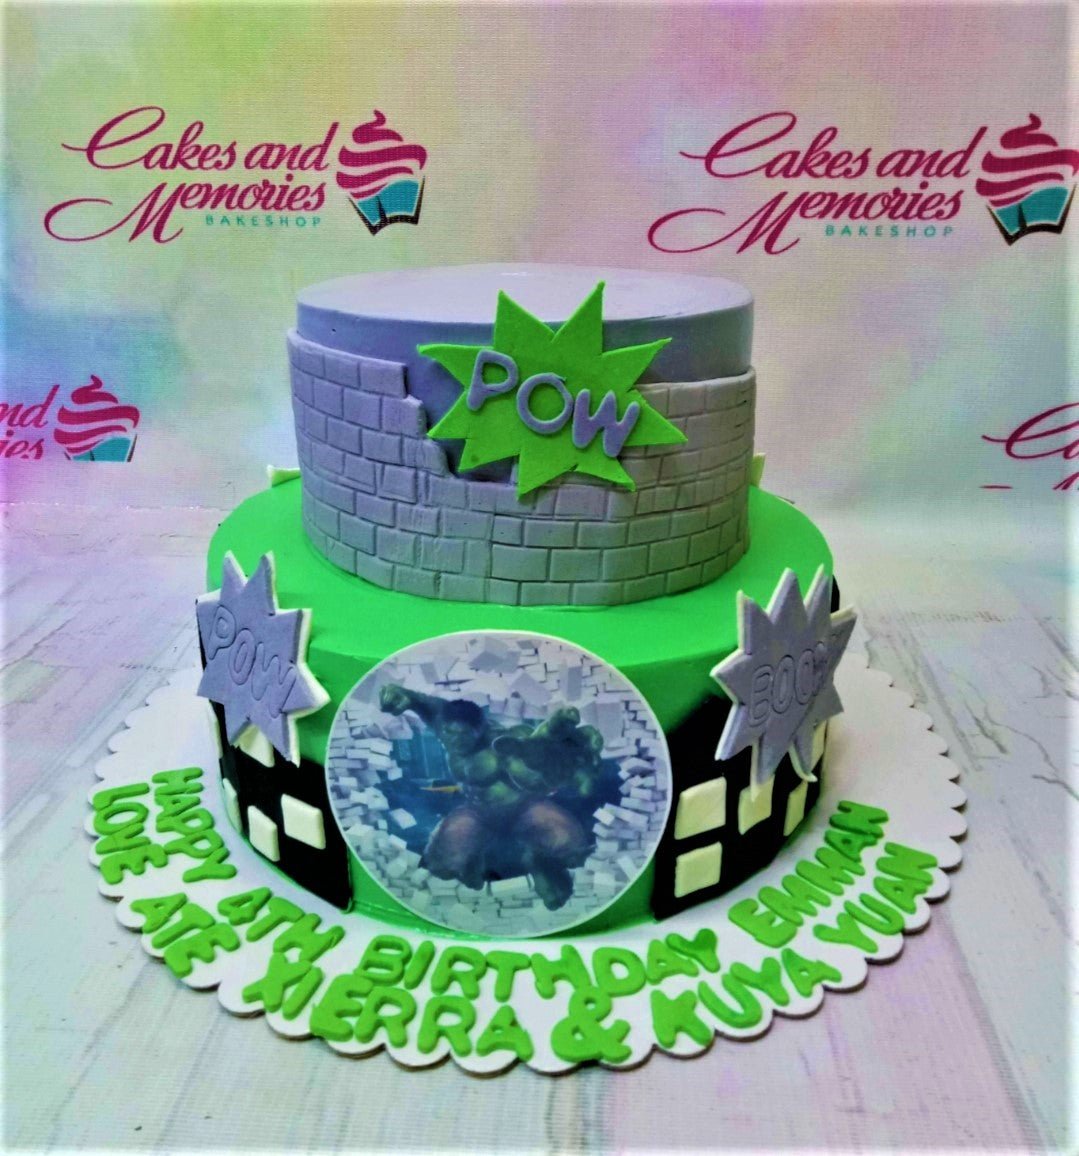 Anniversary Cakes - Quality Cake Company Tamworth